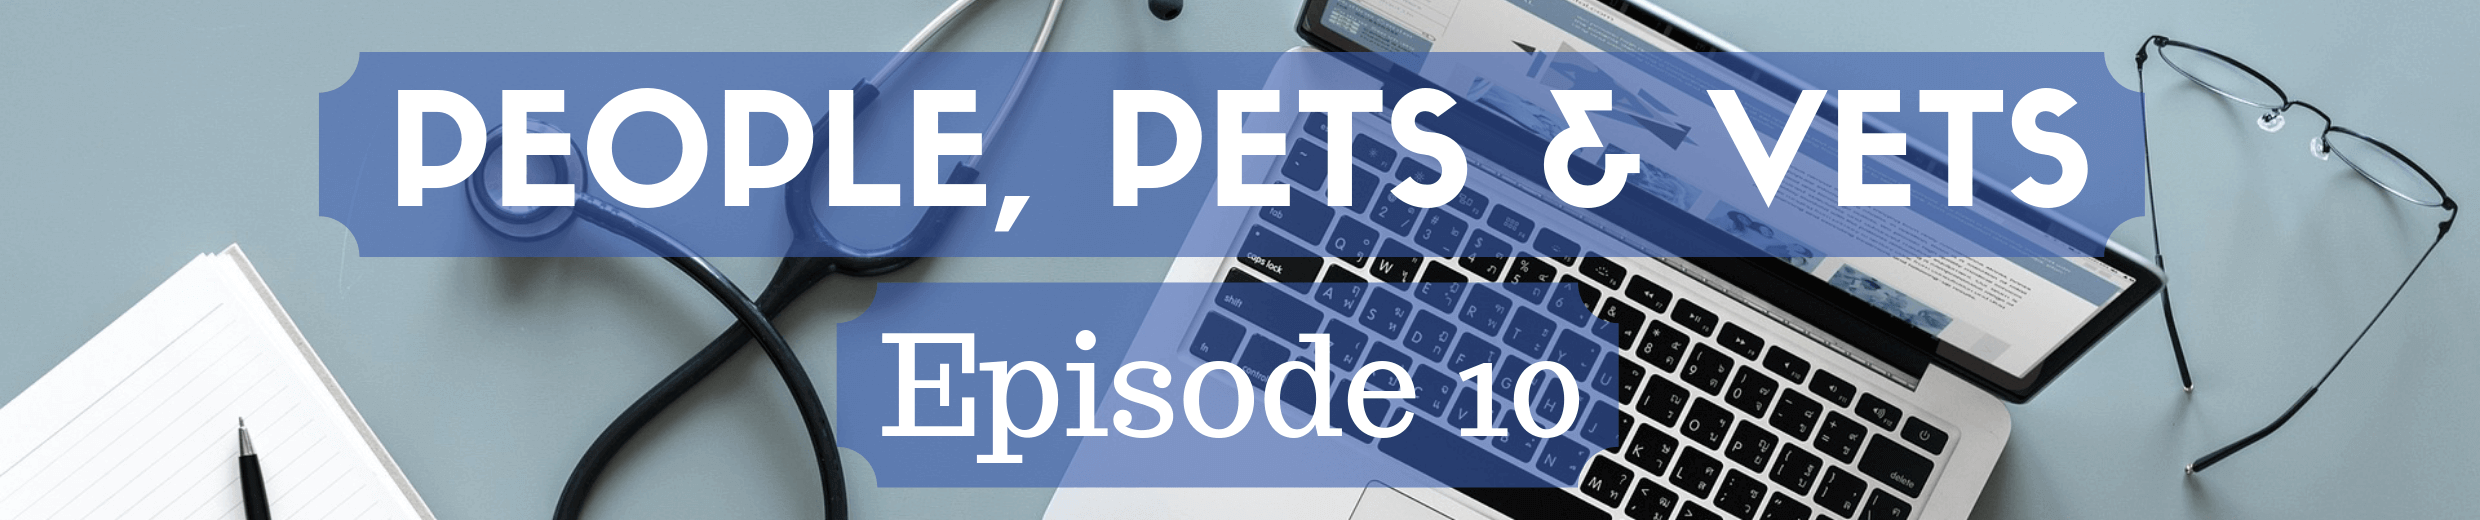 People, Pets & Vets: Episode 10